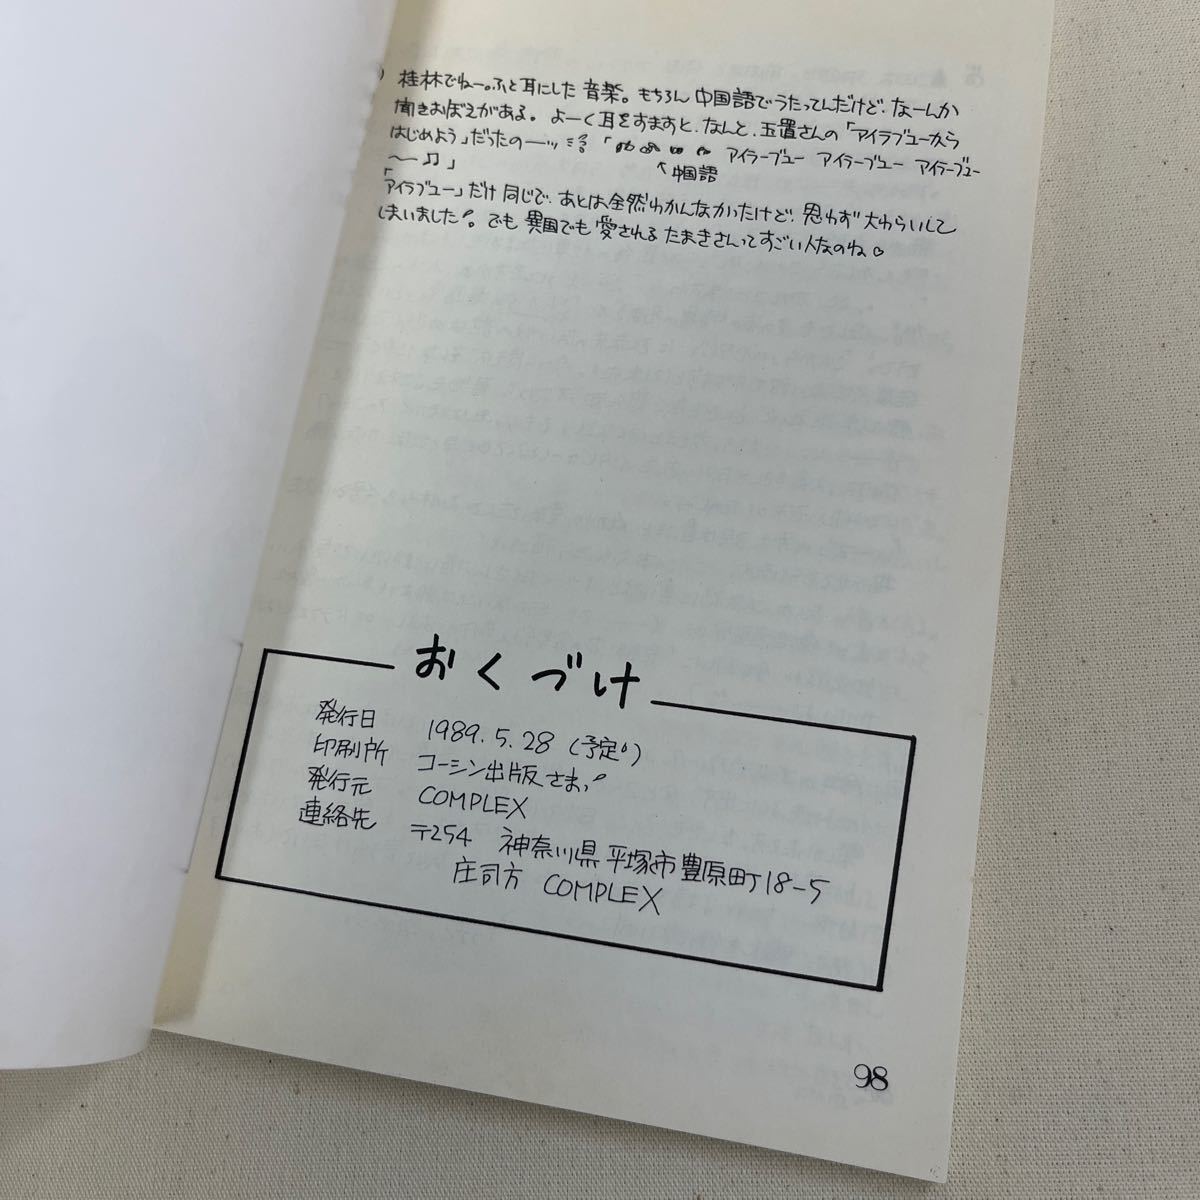 Z943 Captain Tsubasa журнал узкого круга литераторов редкий наан pa........1989 год COMPLEX